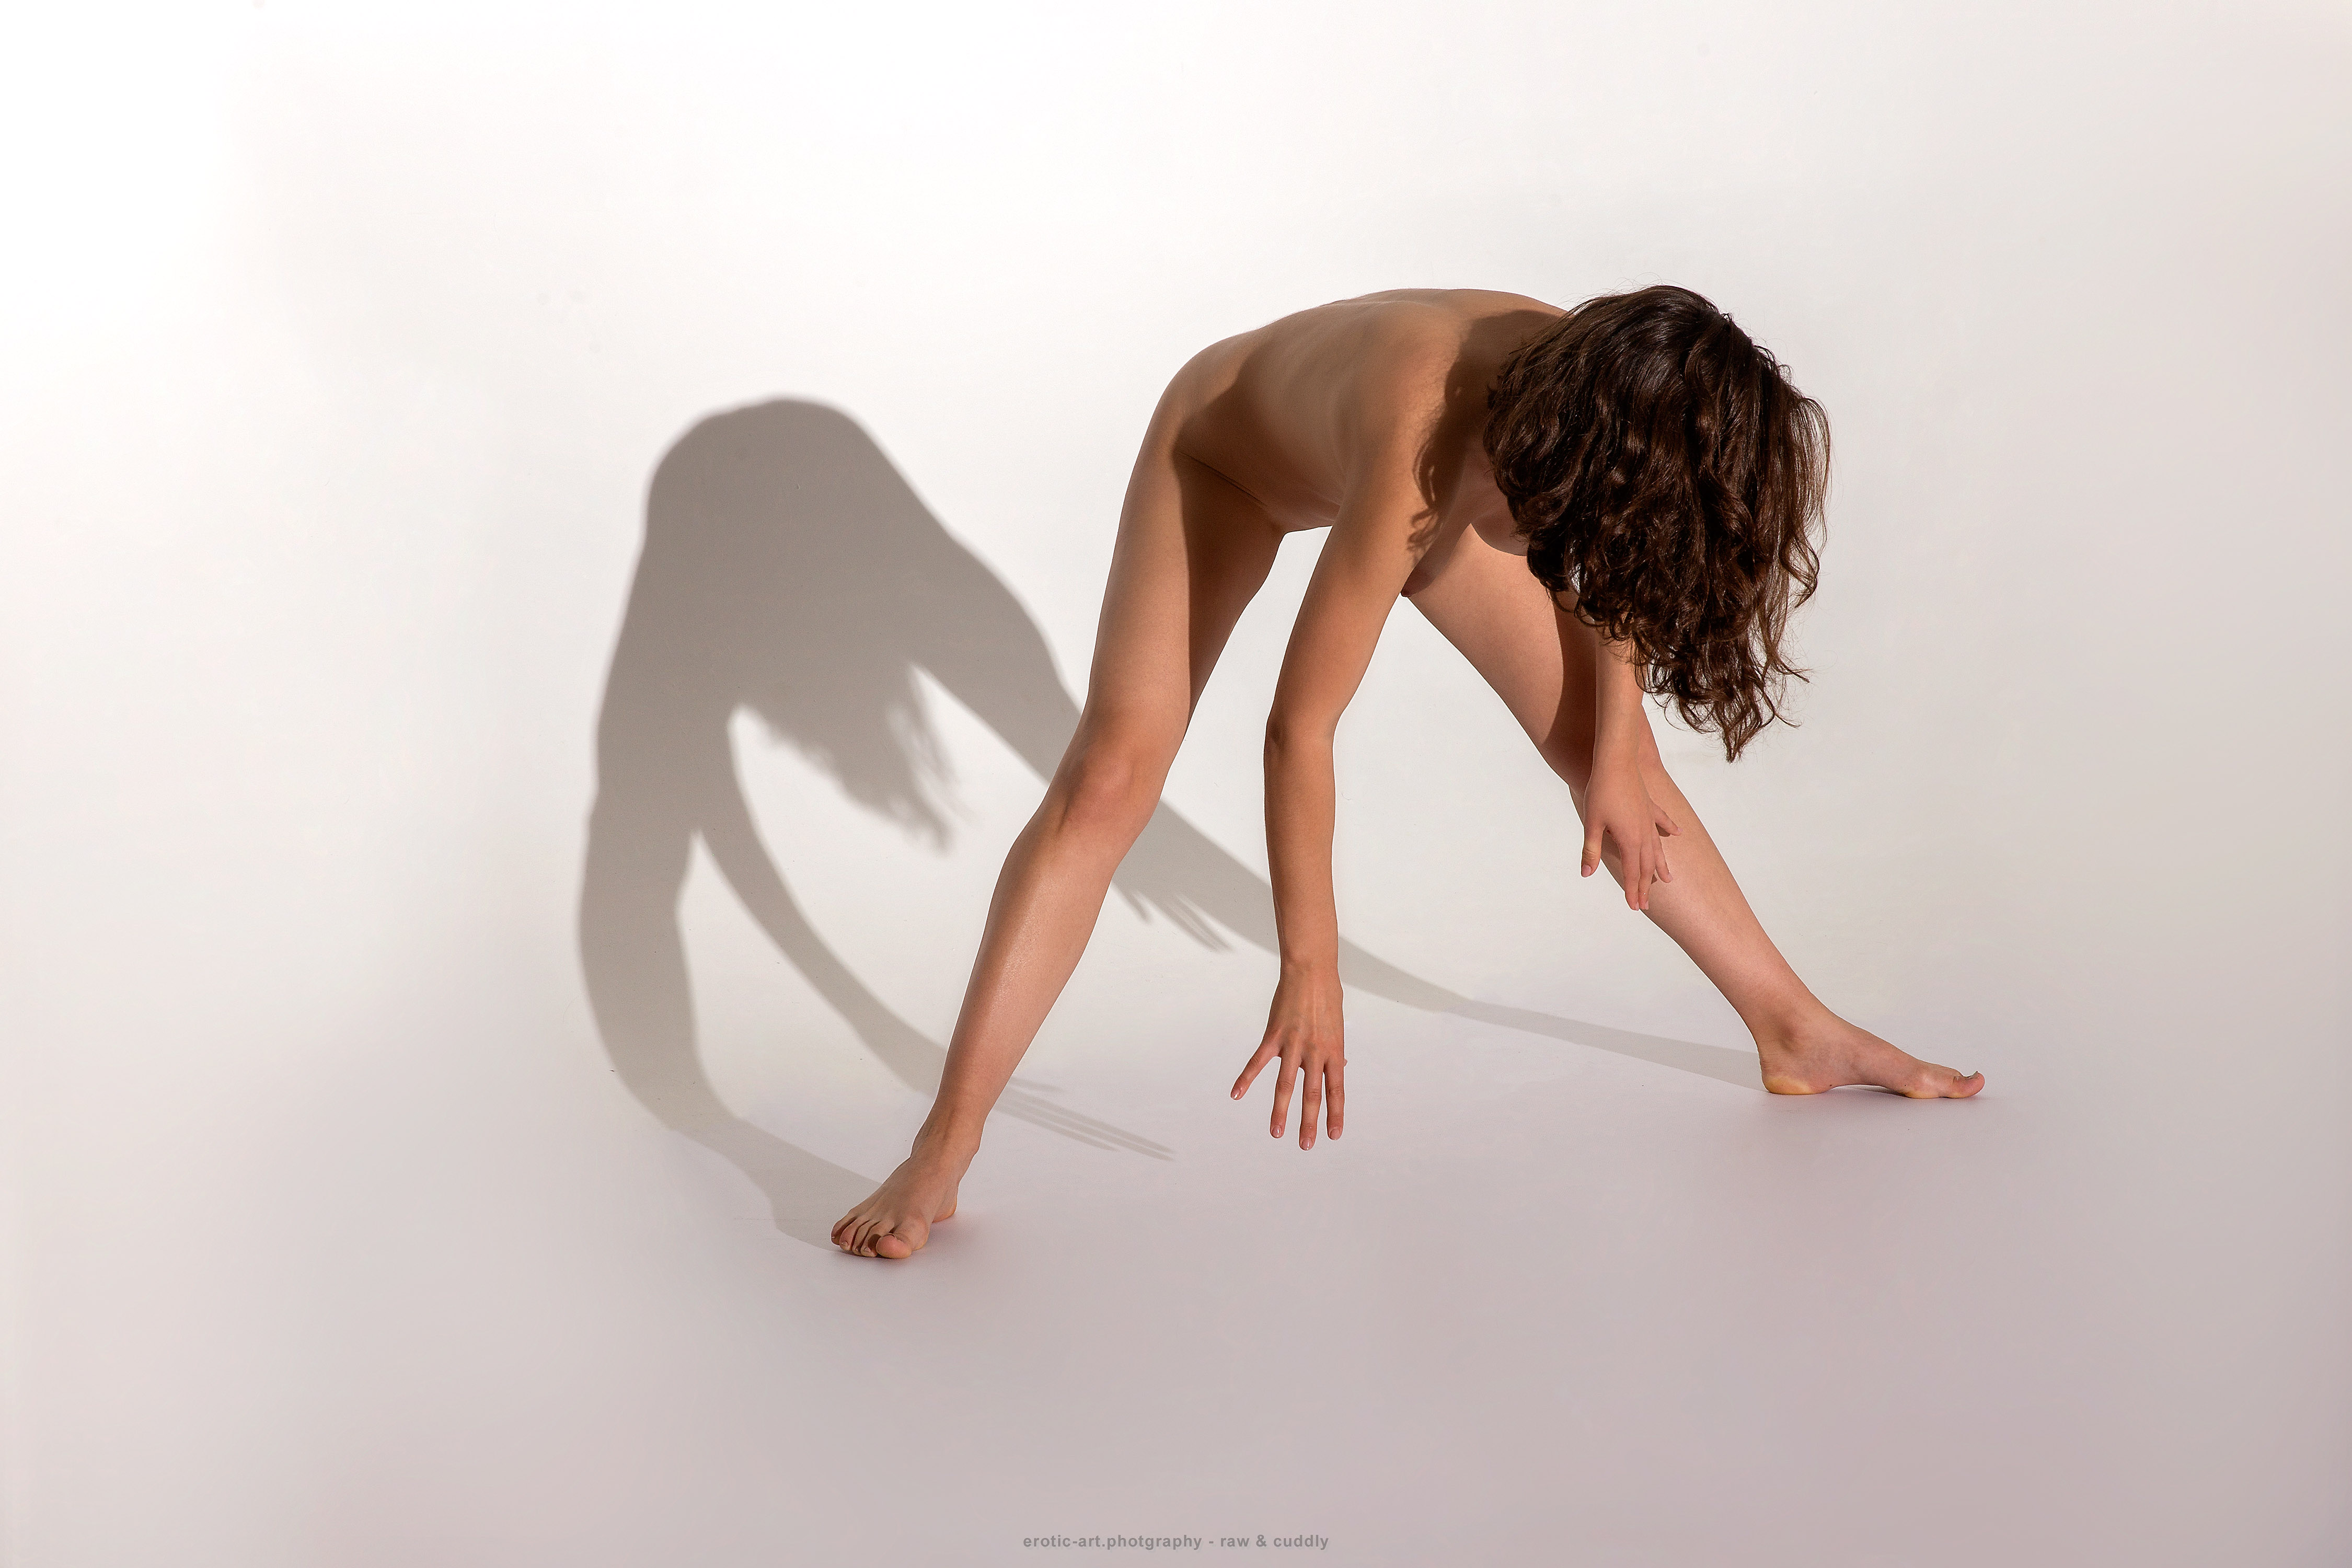 Verla_Shadowplay_erotic-art-photography_0007_high.jpg